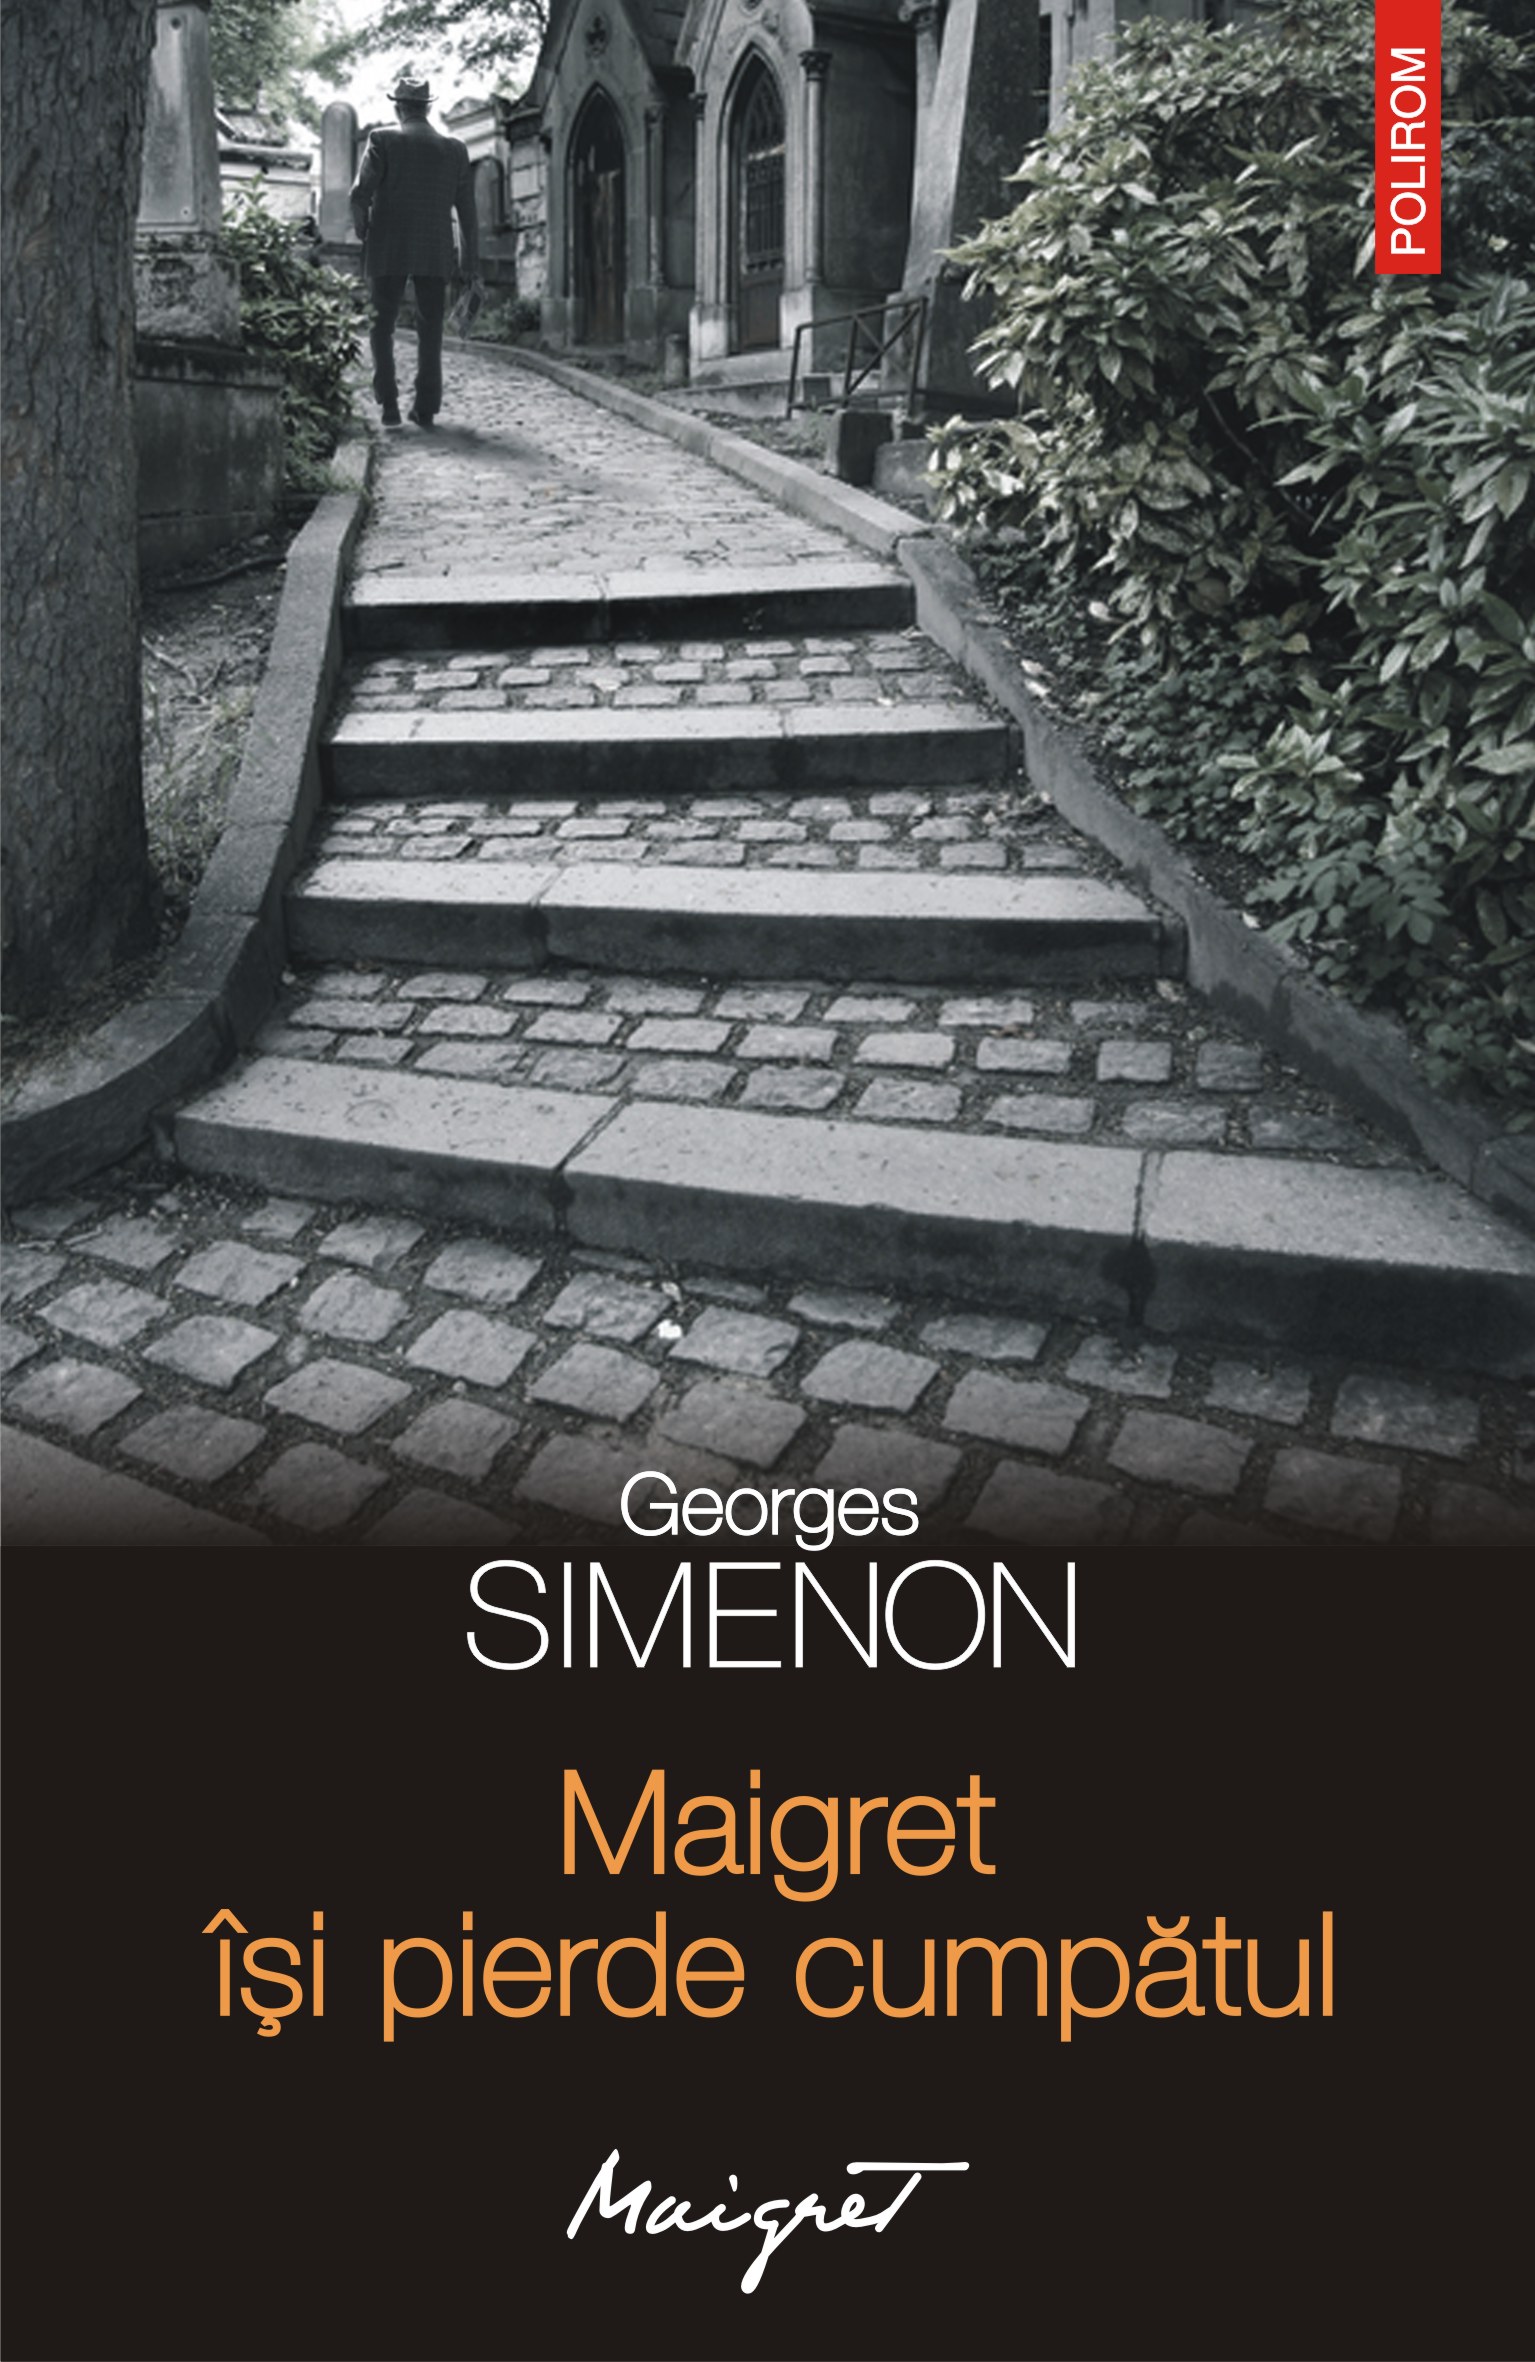 eBook Maigret isi pierde cumpatul - Georges Simenon